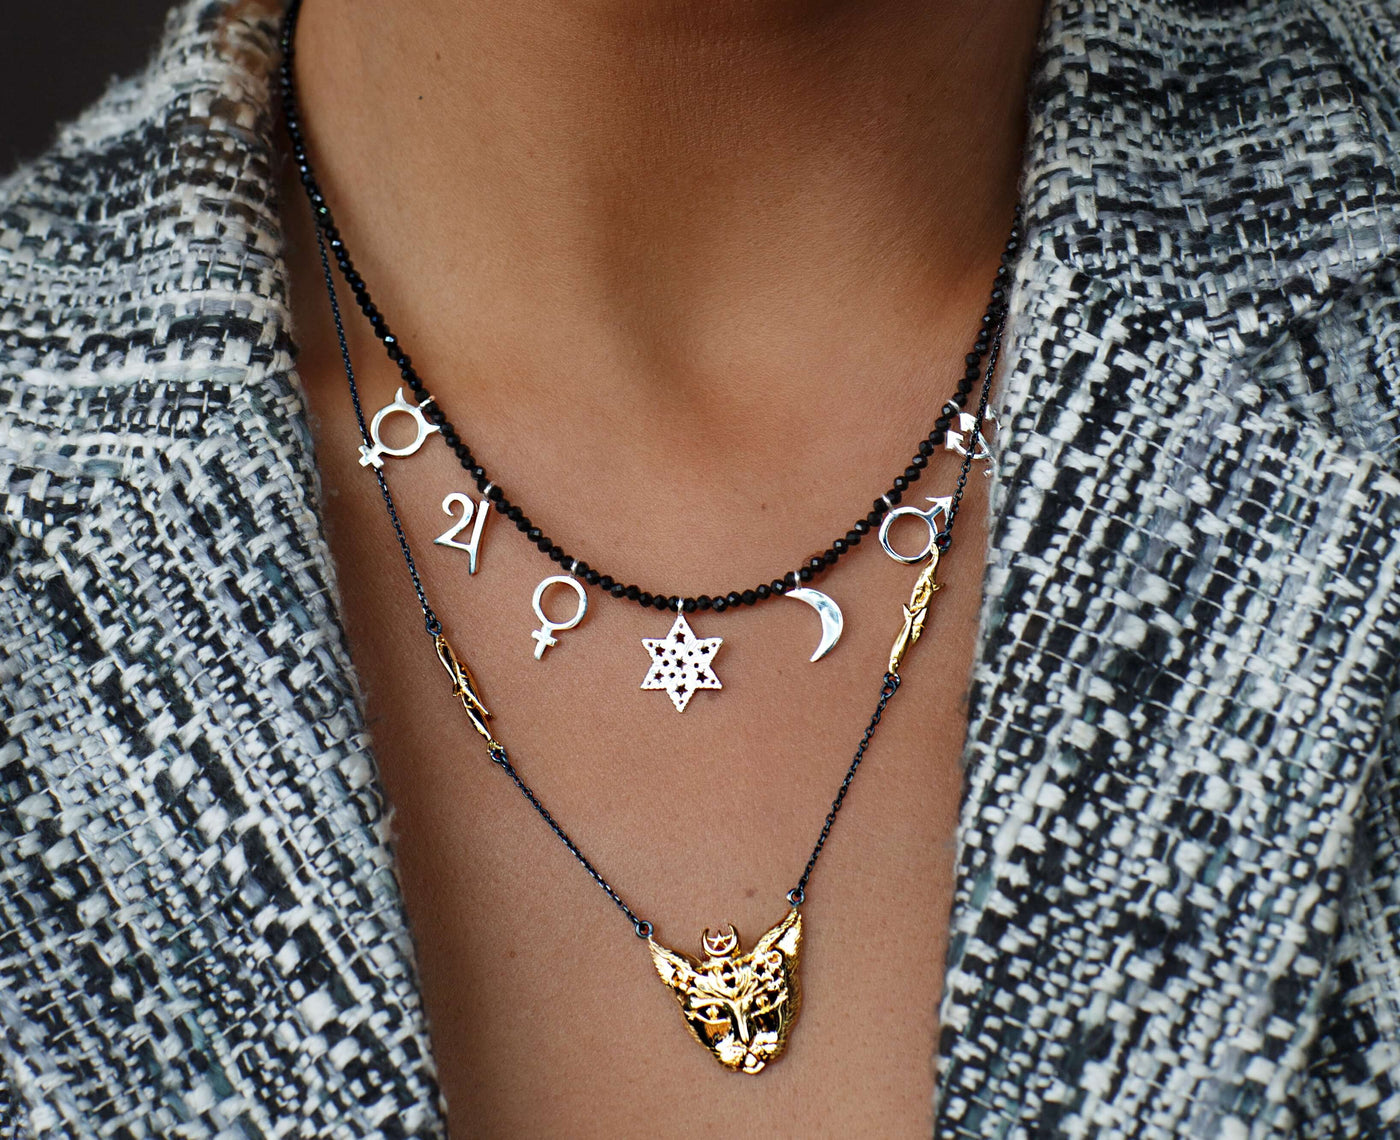 Bastet Goddess necklace. Silver, gold-plated, oxidized